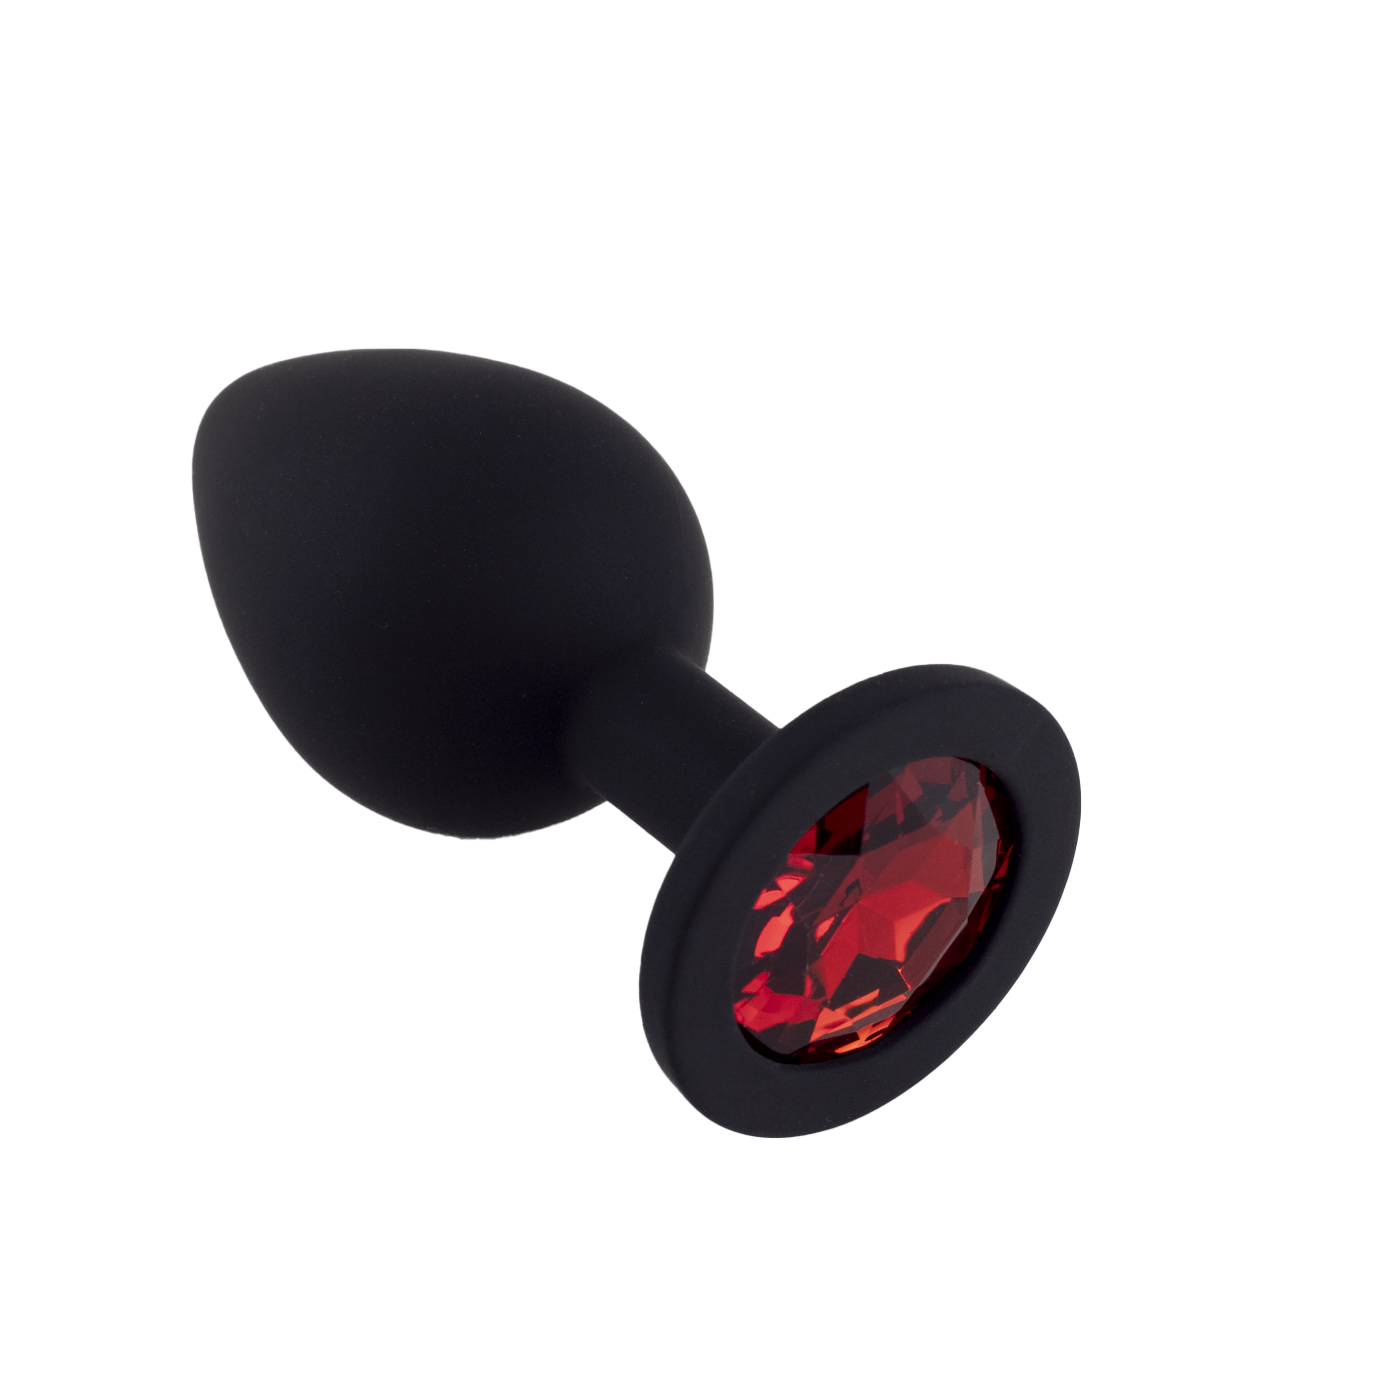 Buttplug Set - FlexToyz Zwarte Siliconen Buttplug Met Rode Diamant